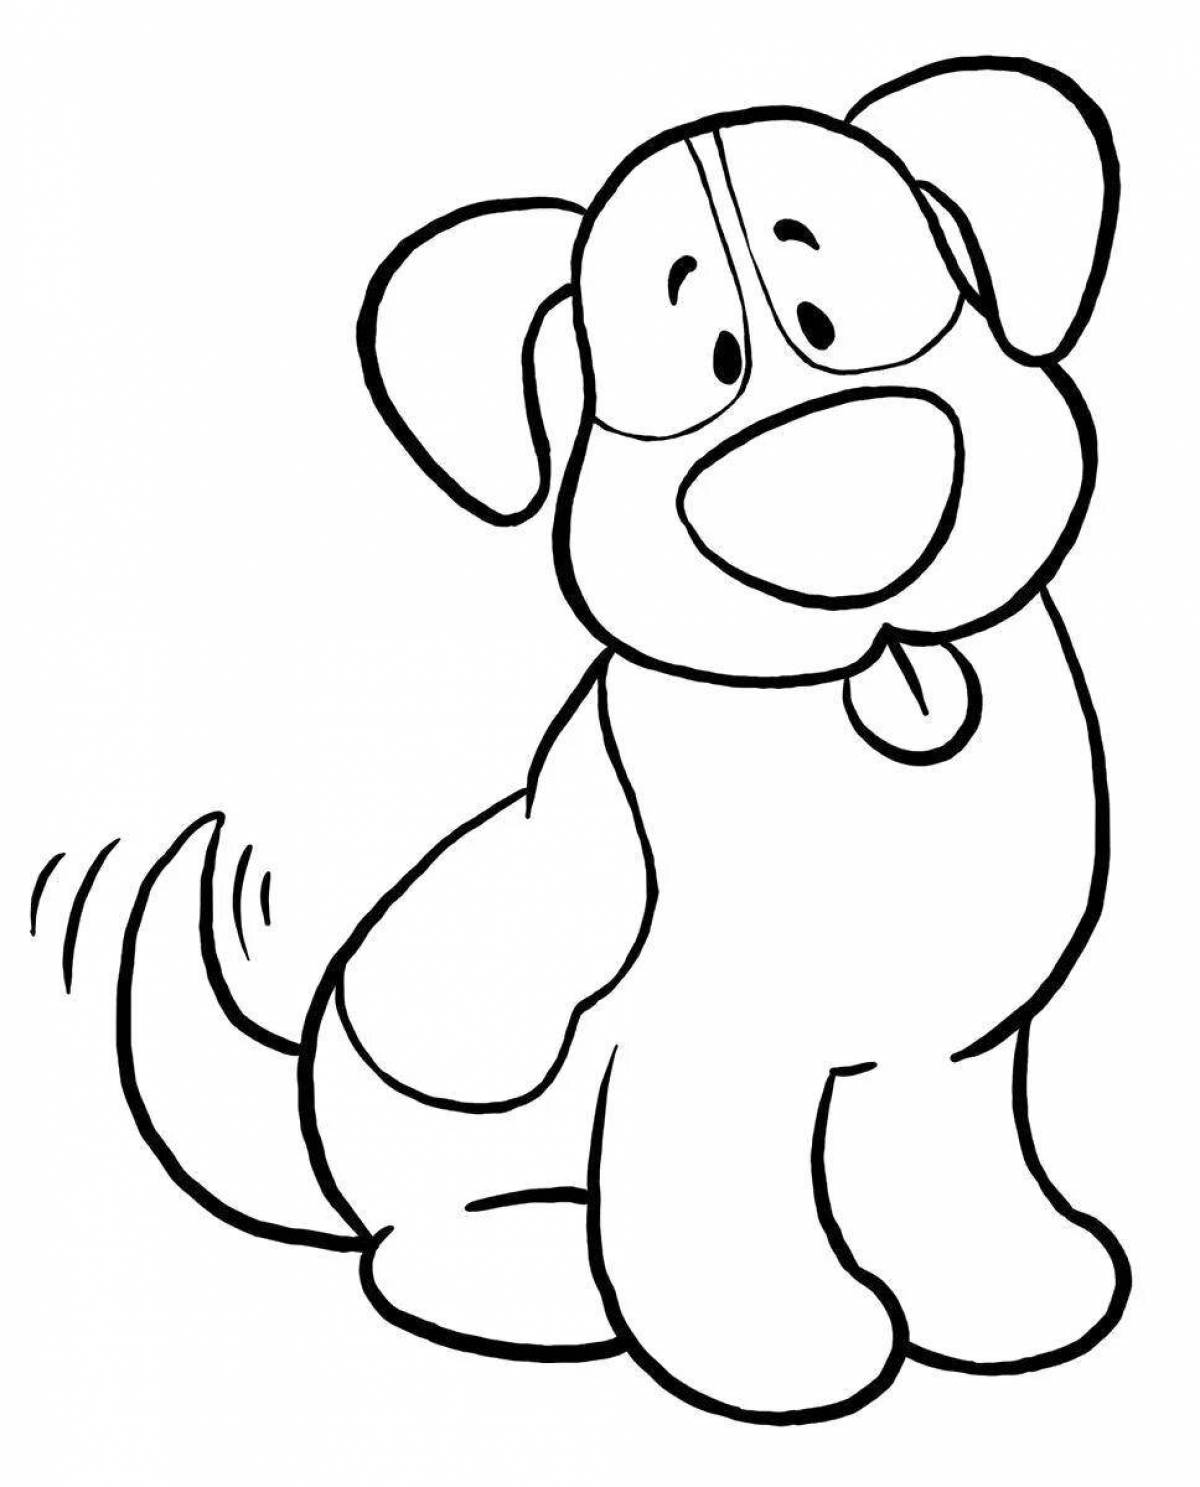 Bubble dog boy coloring book